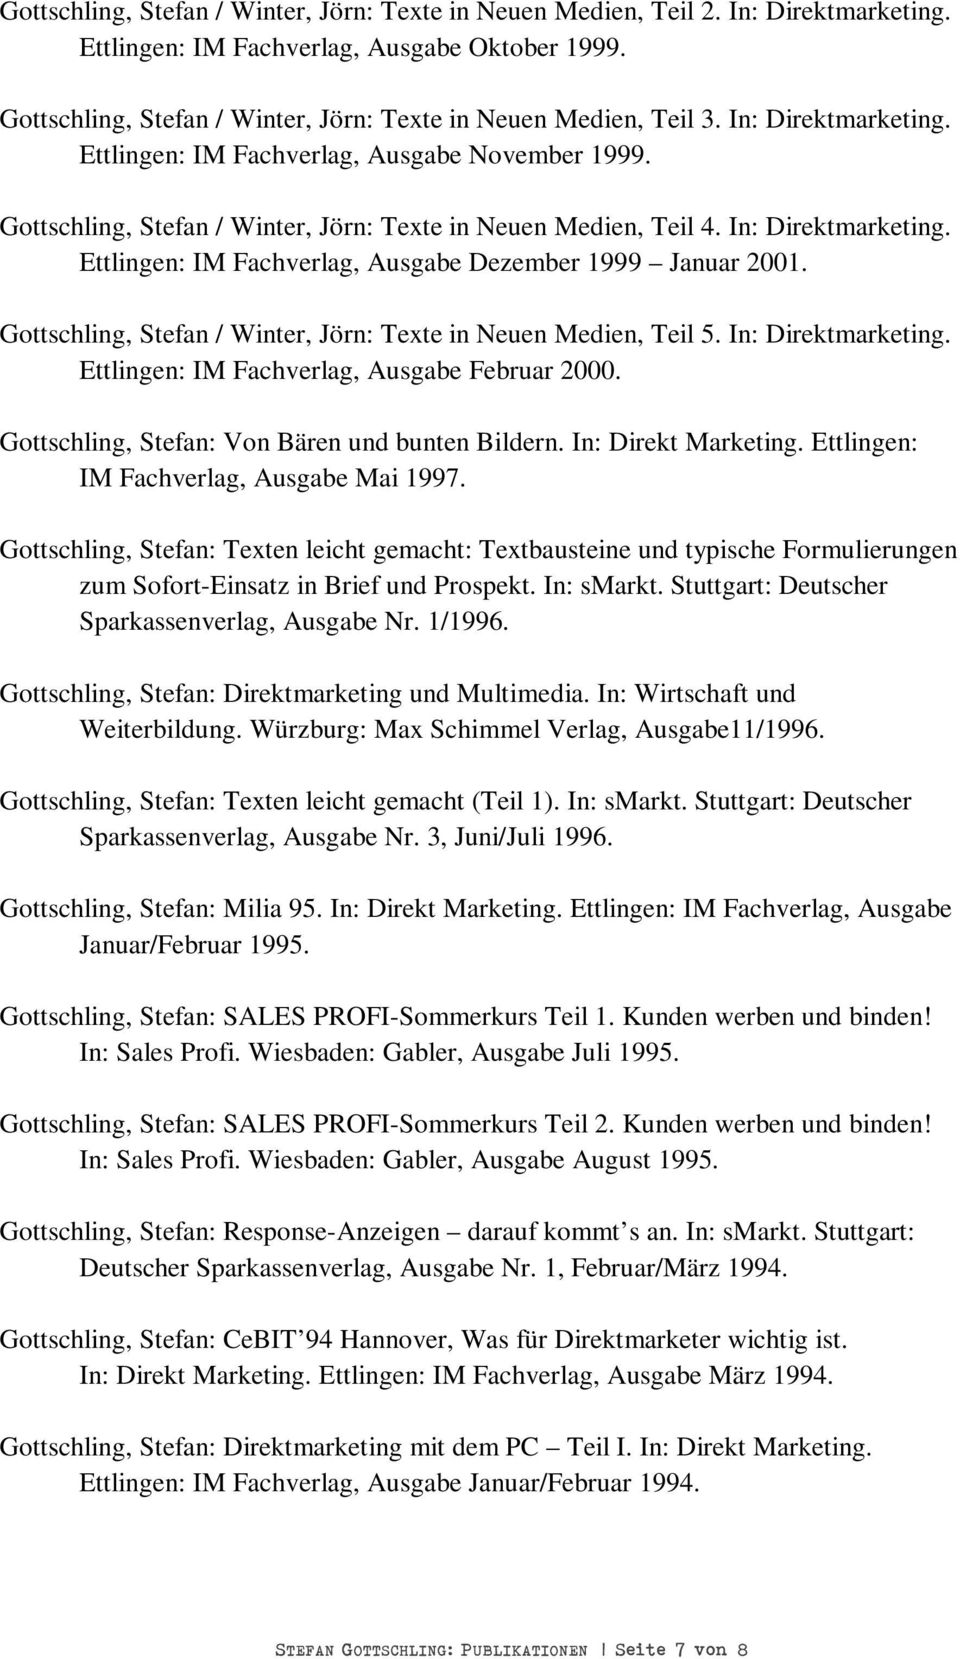 Gottschling, Stefan / Winter, Jörn: Texte in Neuen Medien, Teil 4. In: Direktmarketing. Ettlingen: IM Fachverlag, Ausgabe Dezember 1999 Januar 2001.